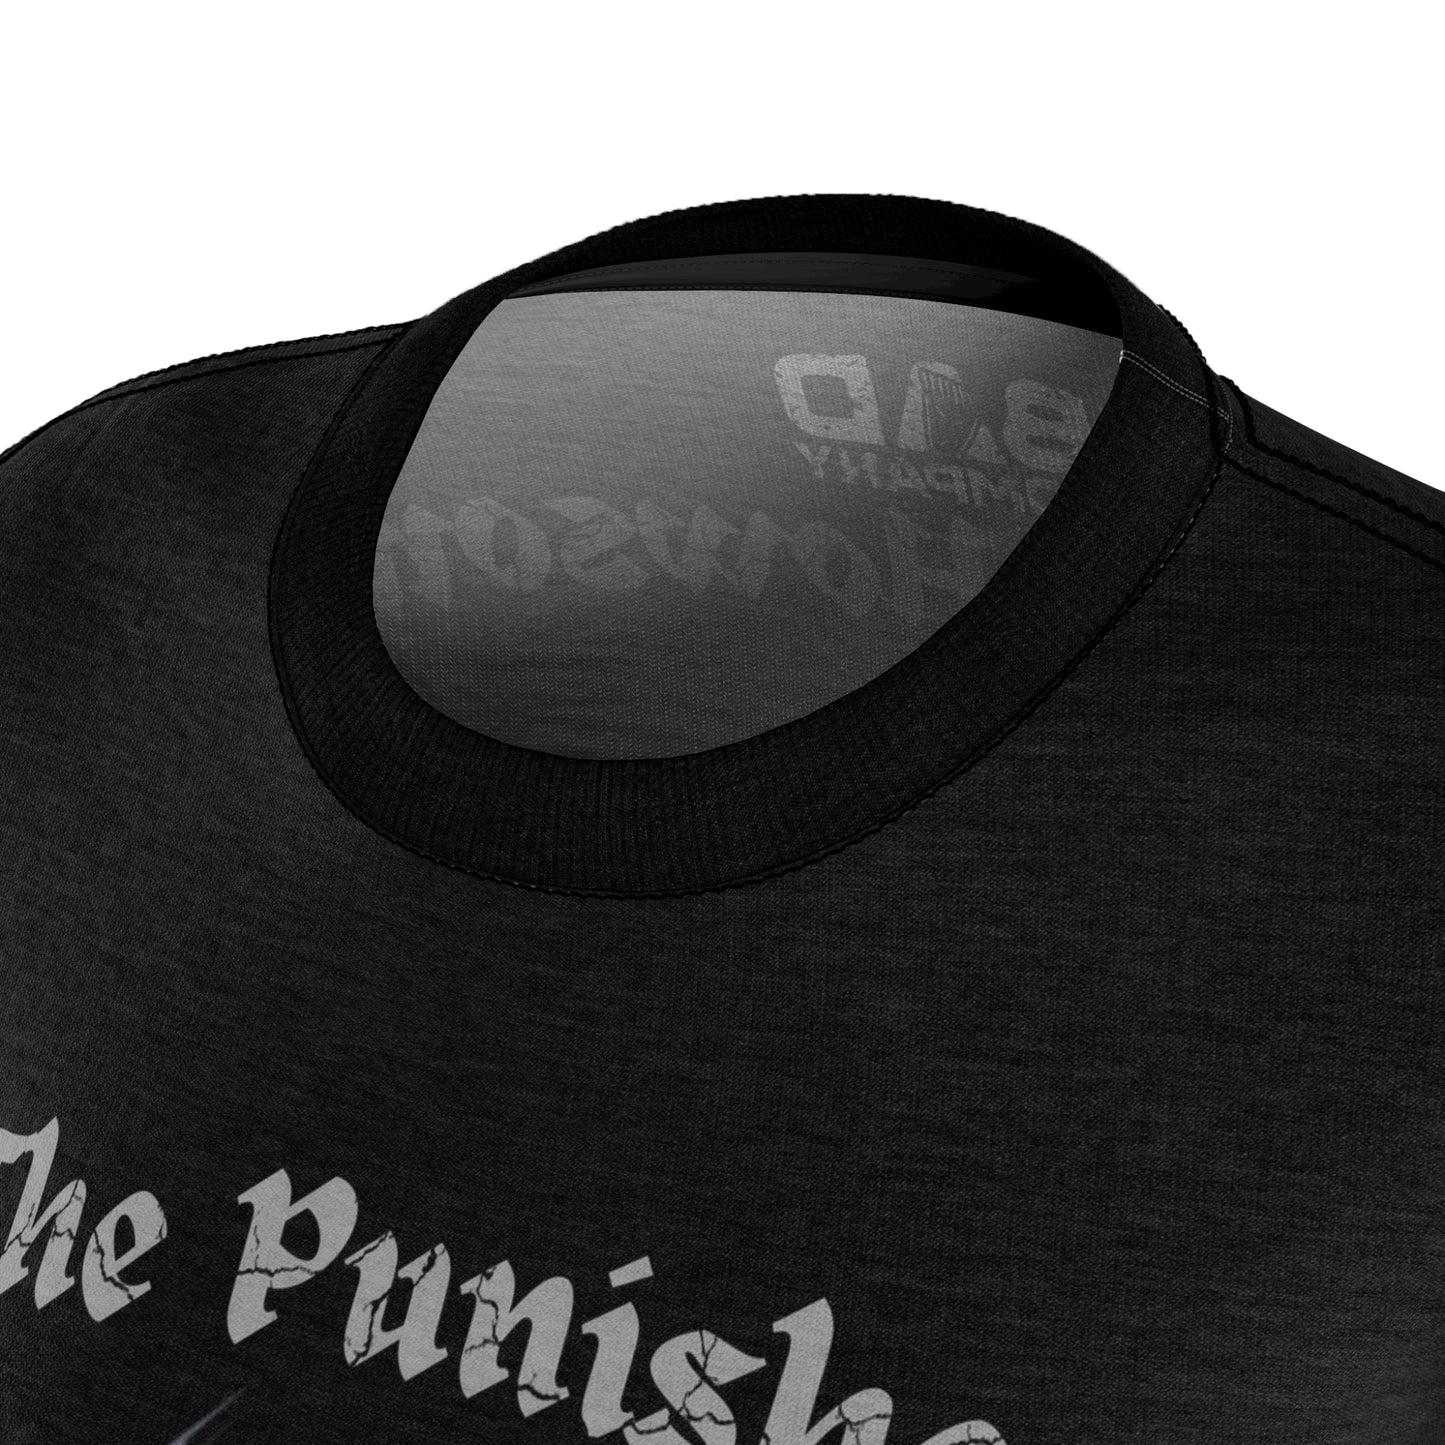 ANDY HOWSON "The Punisher" Premium Women's Tee